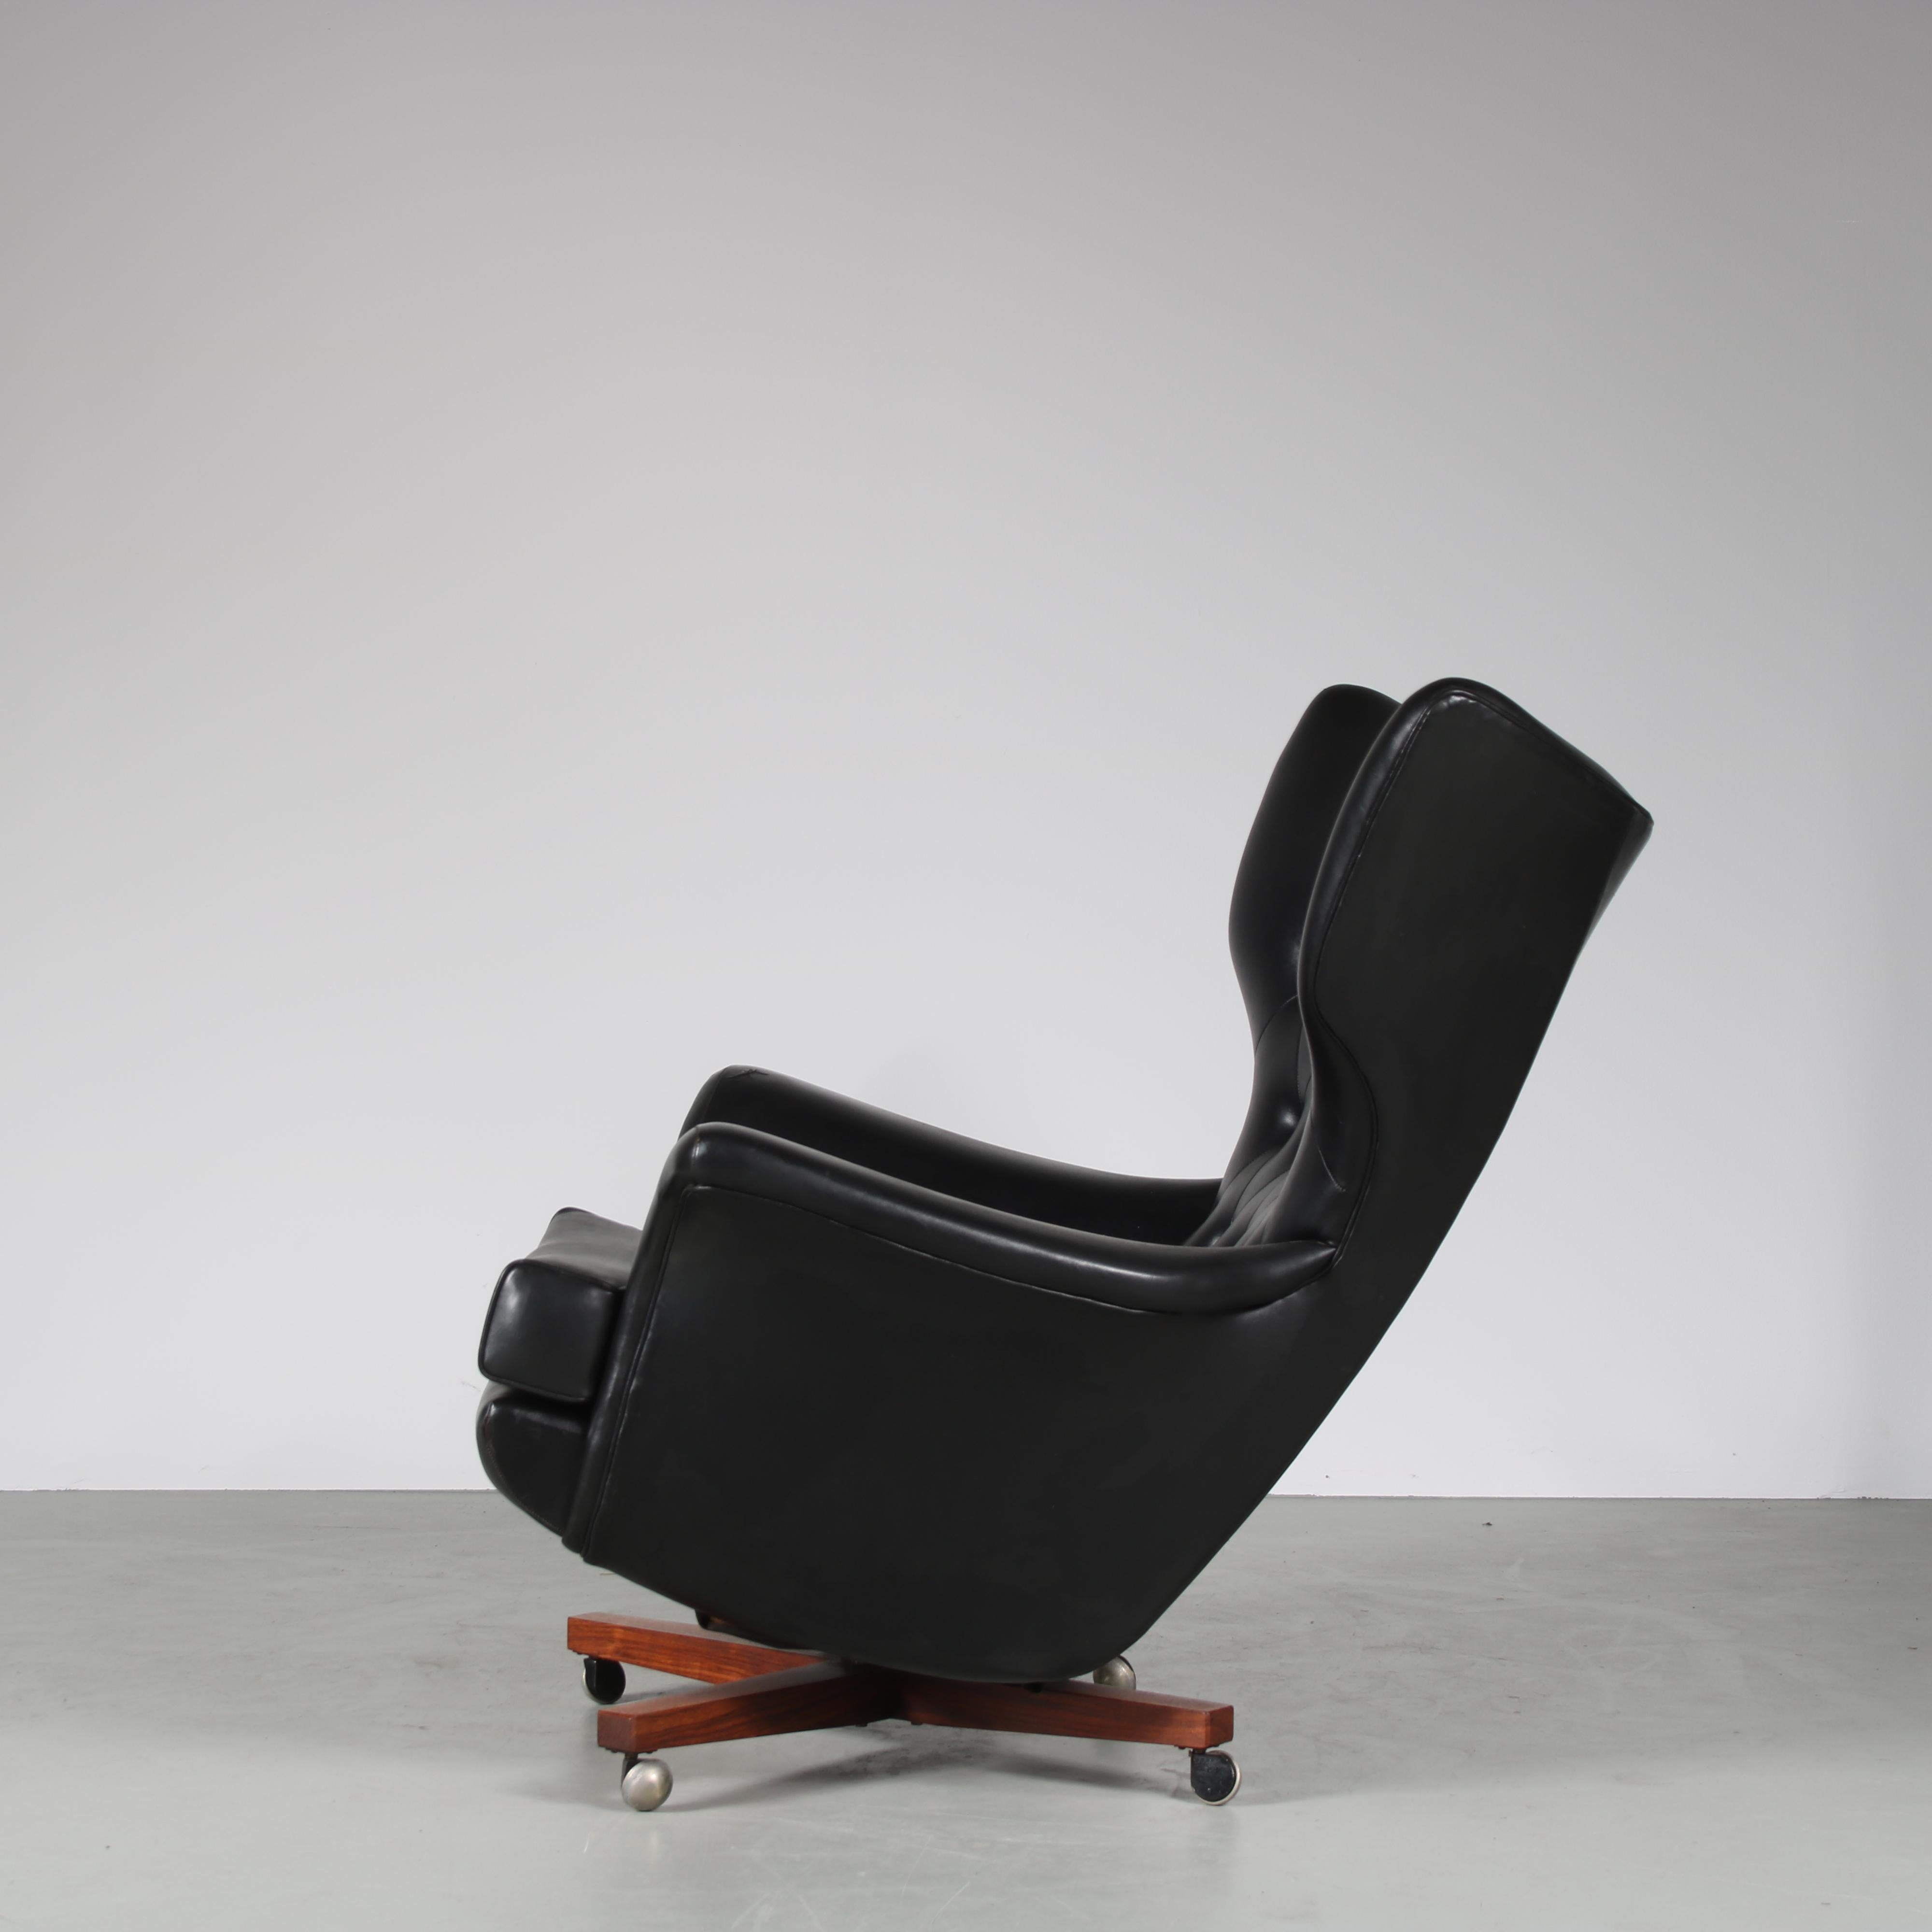 British Model 6250 “Villain Chair” by G-Plan, UK, 1960